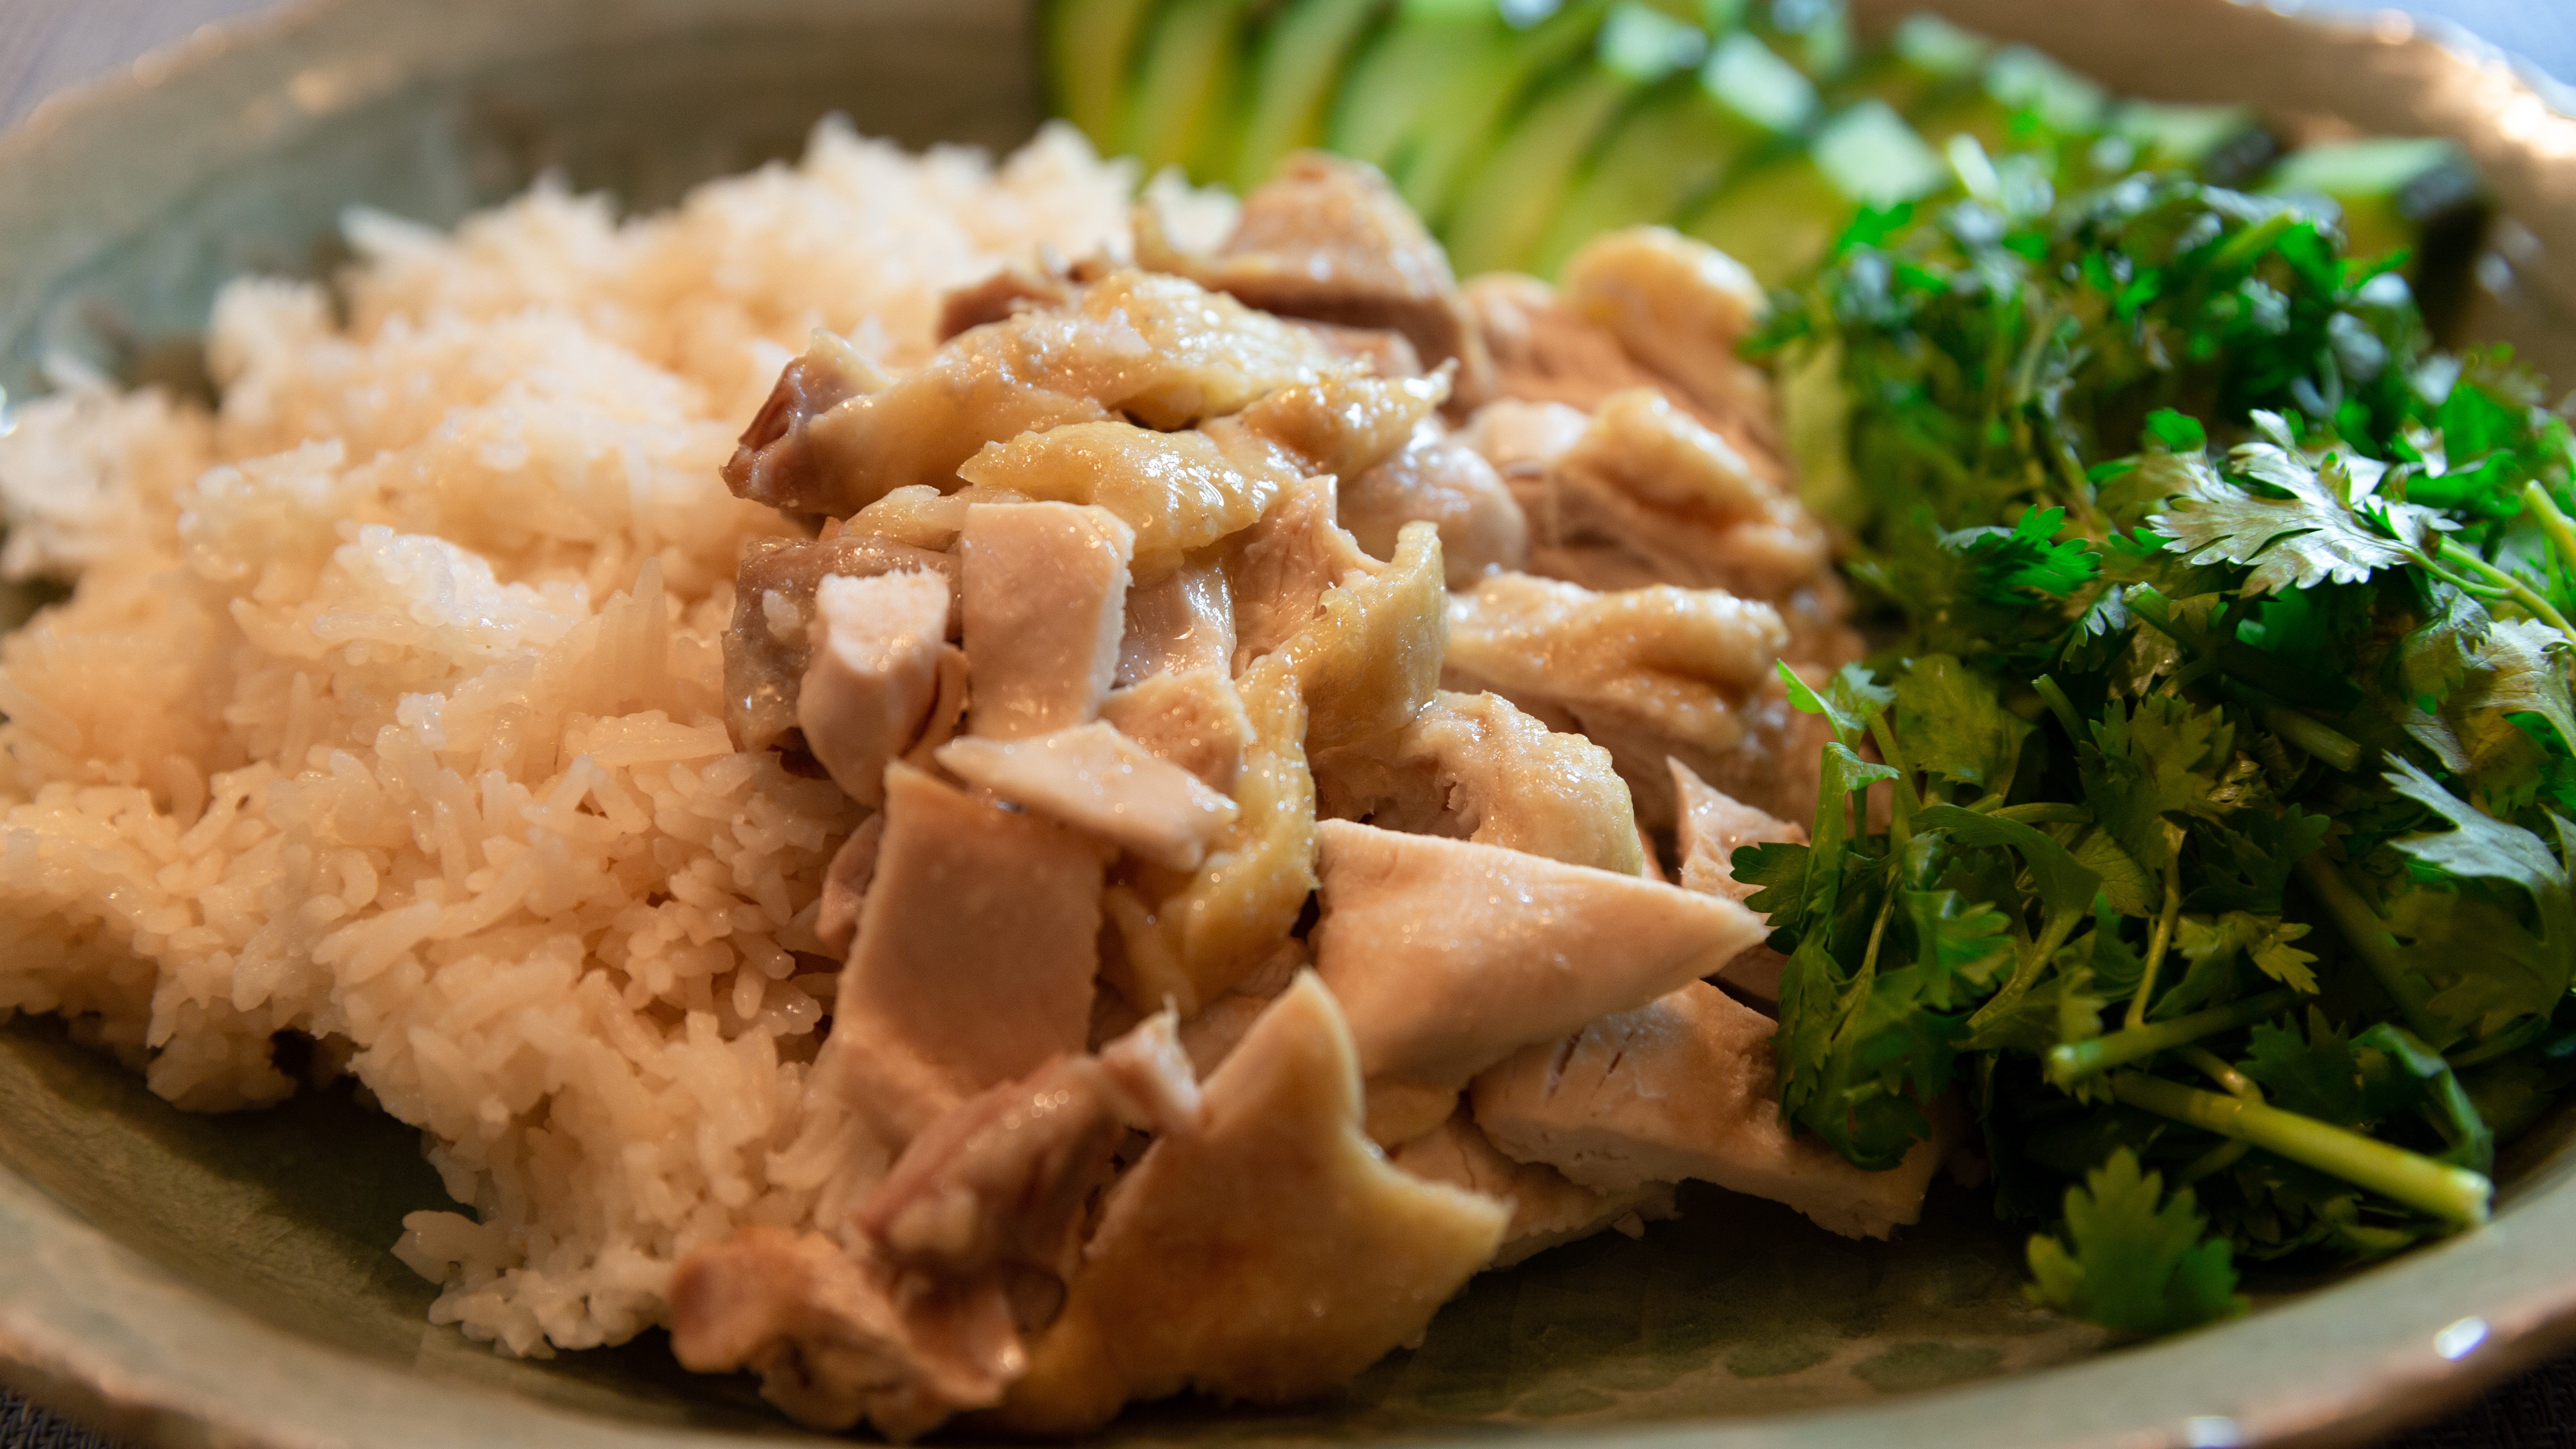 【Gourmet】辛くないタイ料理としても人気な“カオマンガイ”！プリップリの鶏もも肉とご一緒に